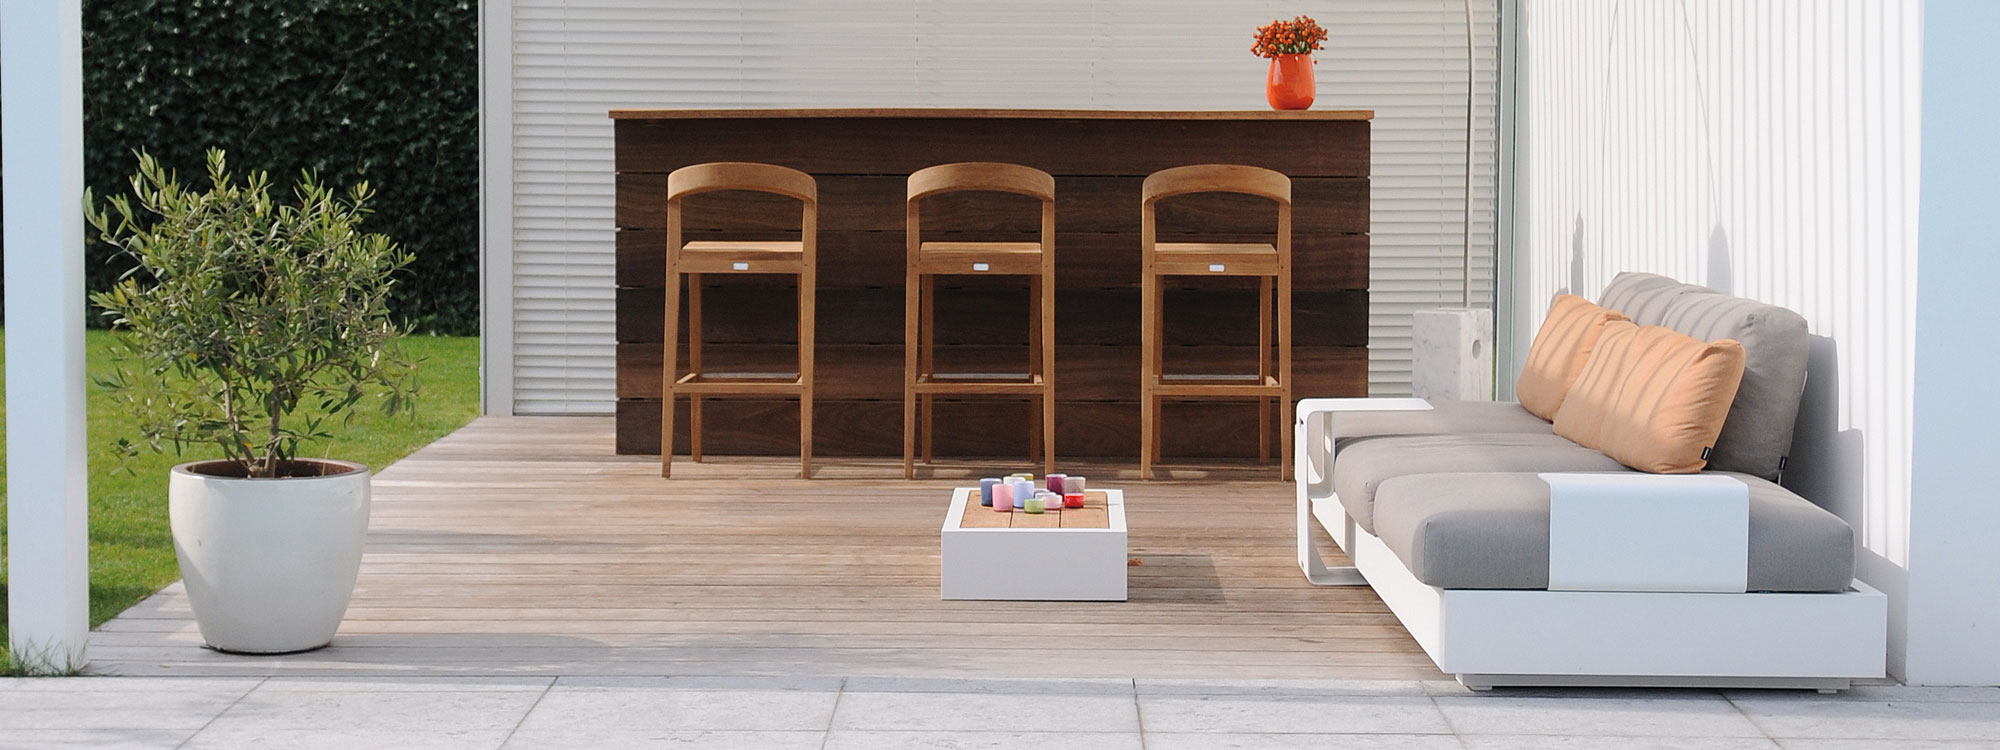 Wildpsirit Play modern exterior bar furniture - luxury teak bar table, teak bar stool